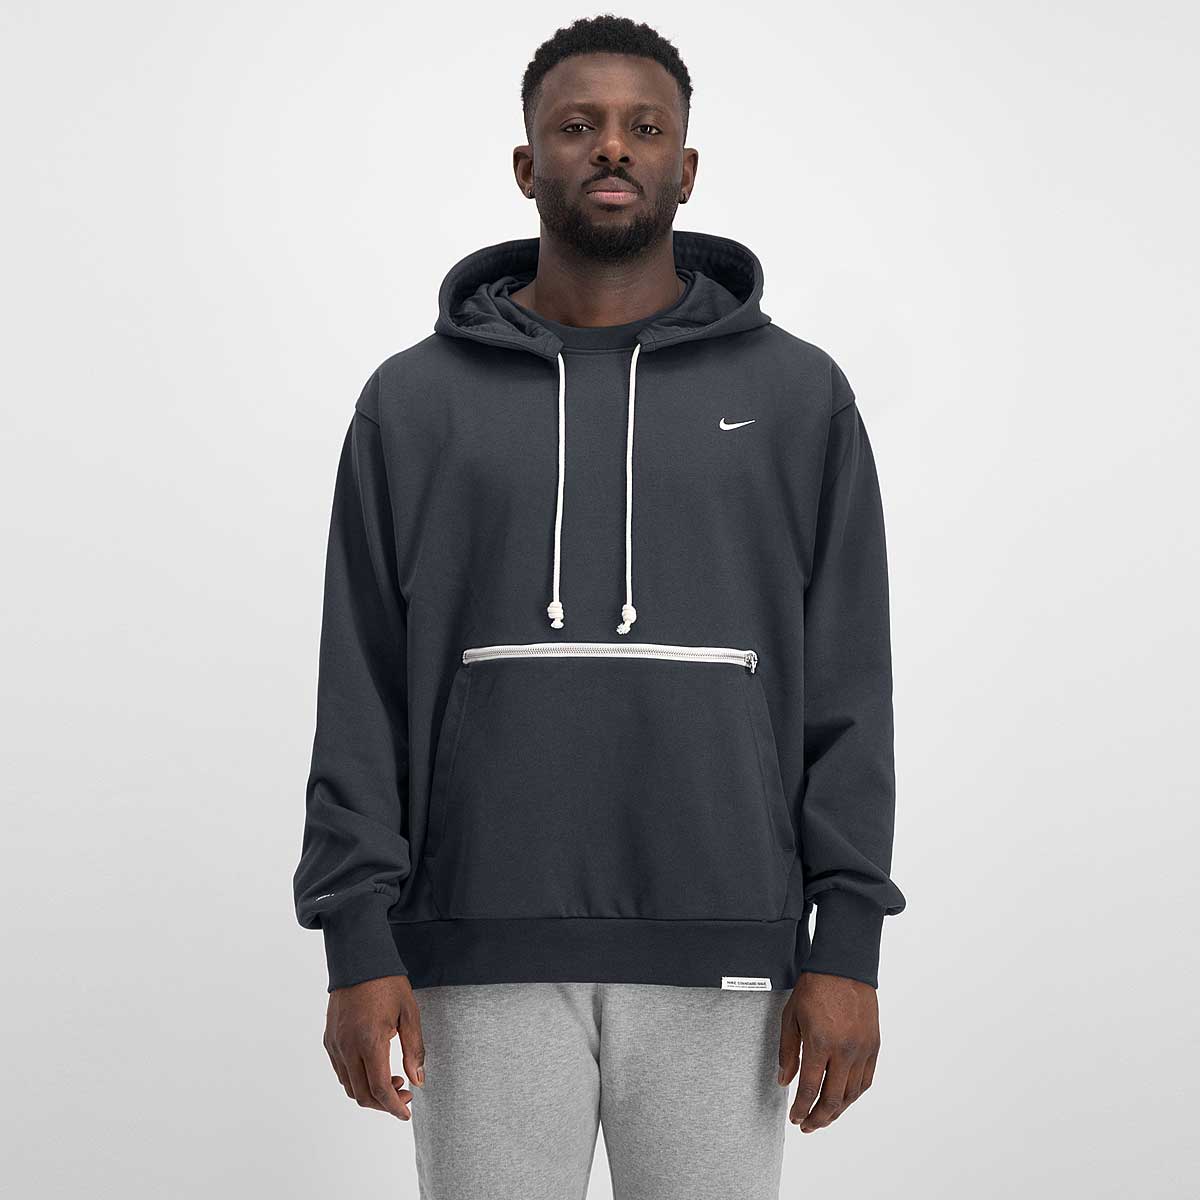 Nike Standard Issue Hoody - Grey